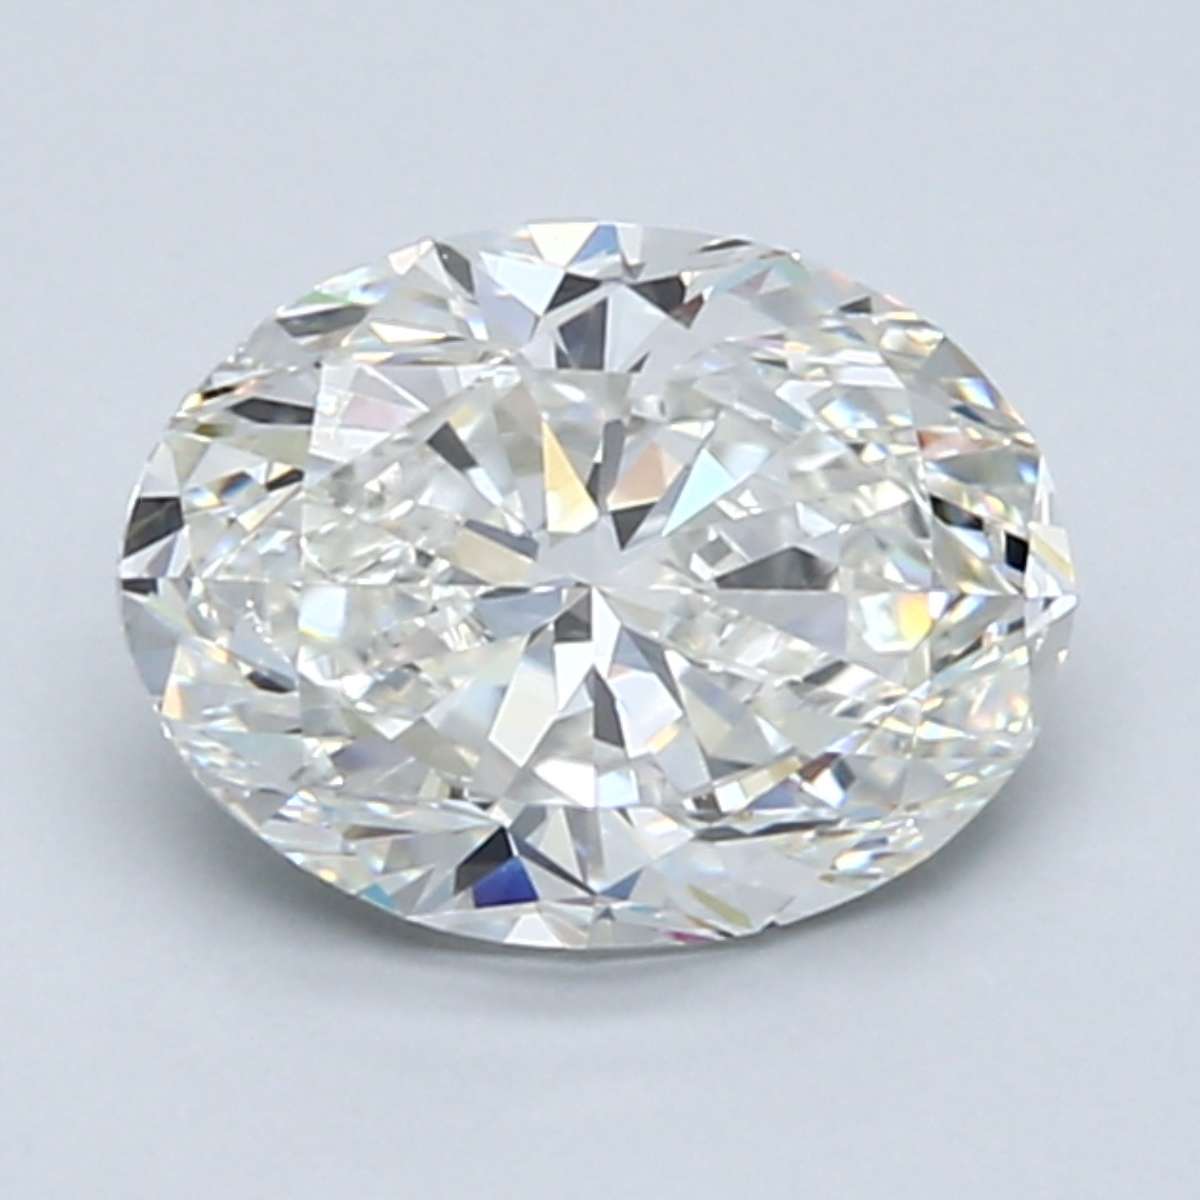 The Oval Cut Diamond Guide